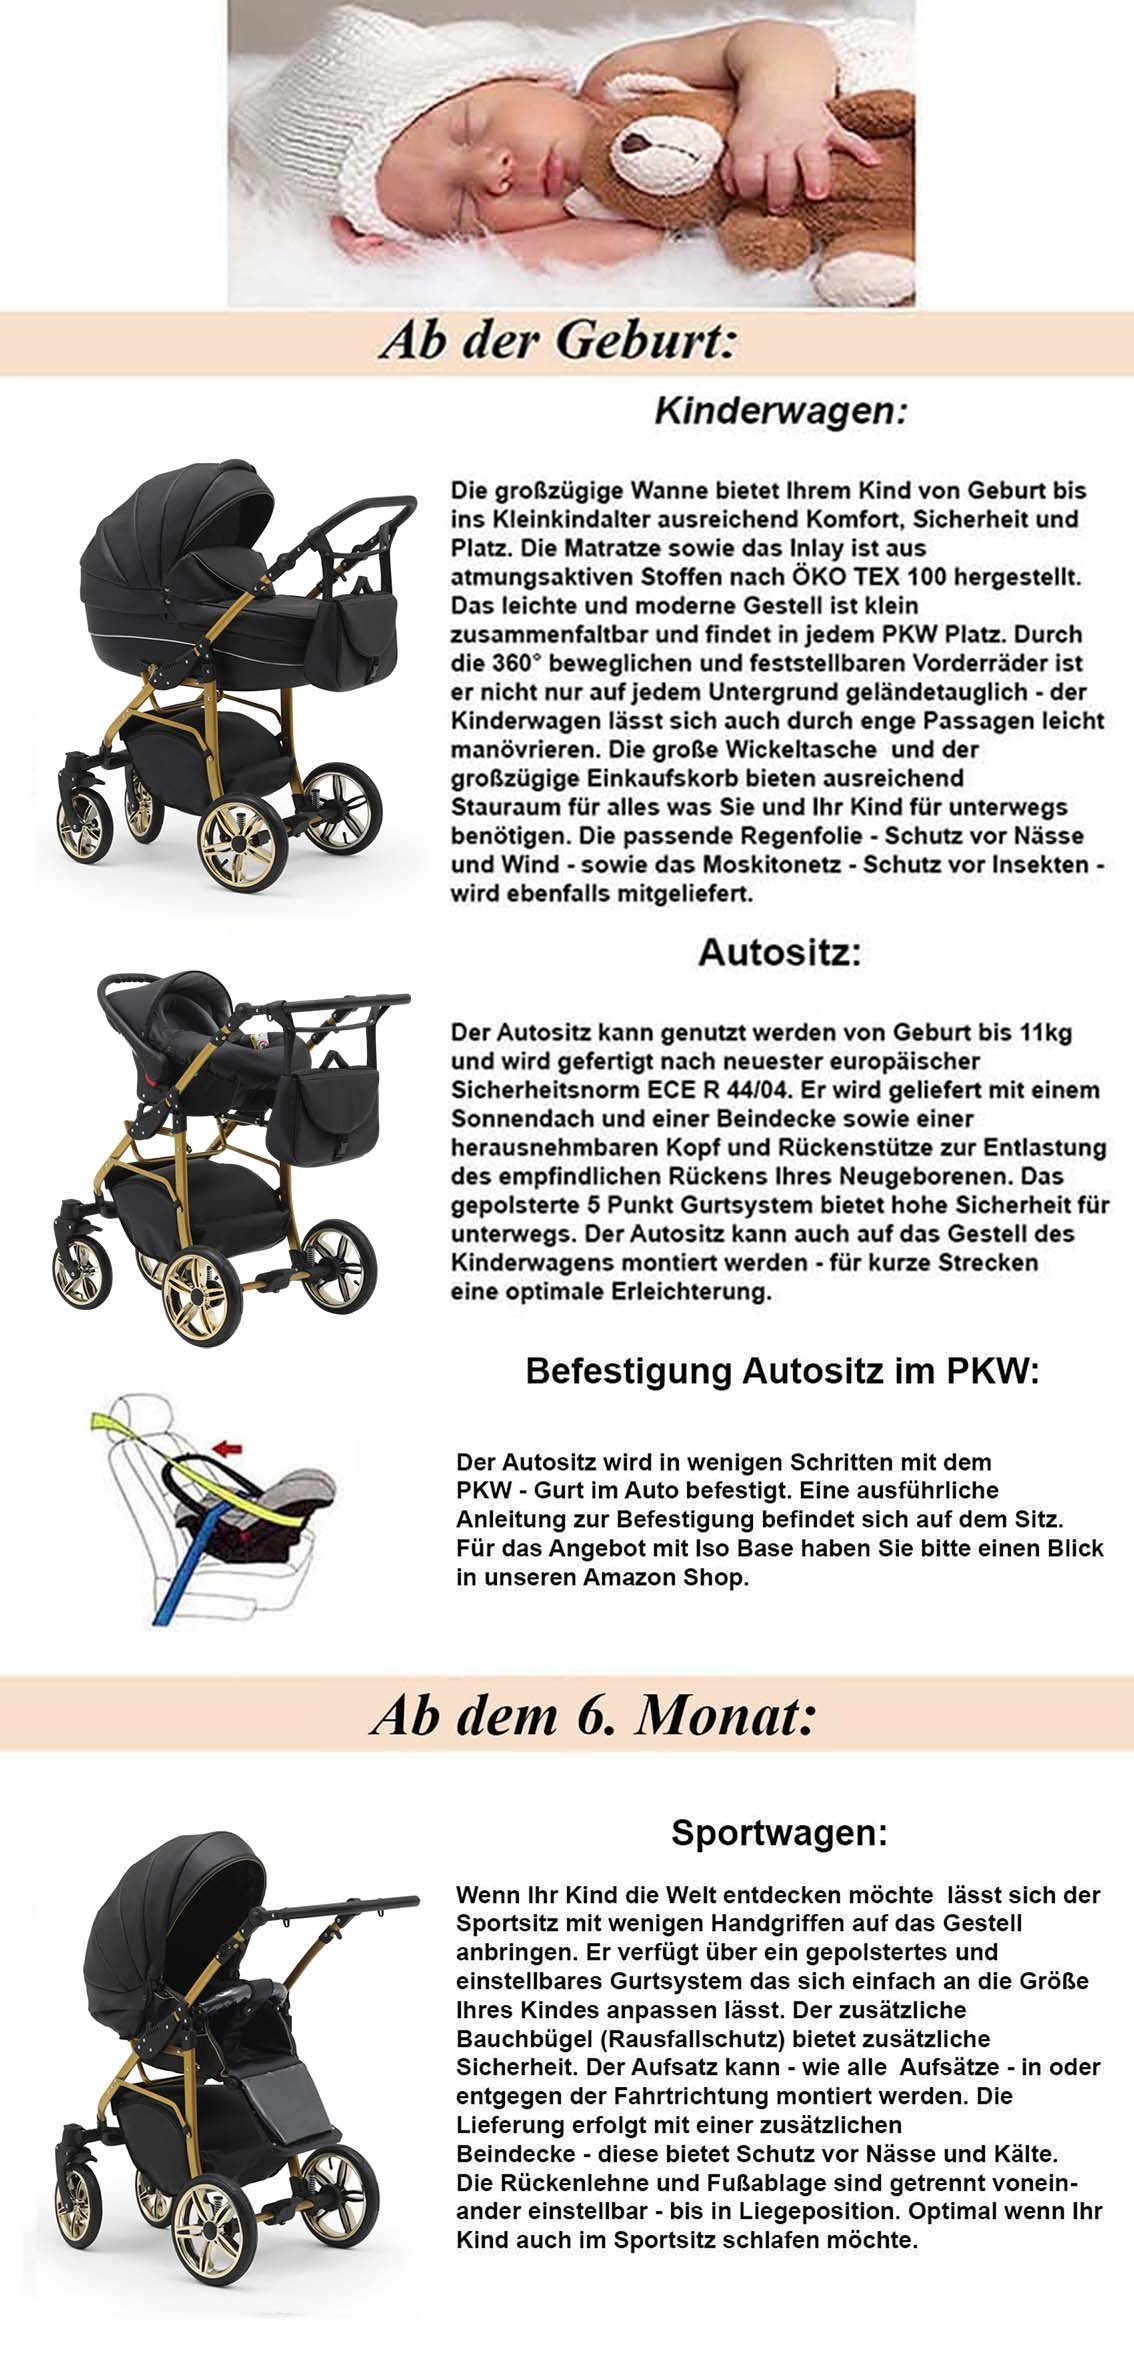 ECO Gold Teile in Kombi-Kinderwagen in Farben Grau-Grün - 3 16 babies-on-wheels Cosmo Kinderwagen-Set 1 46 -